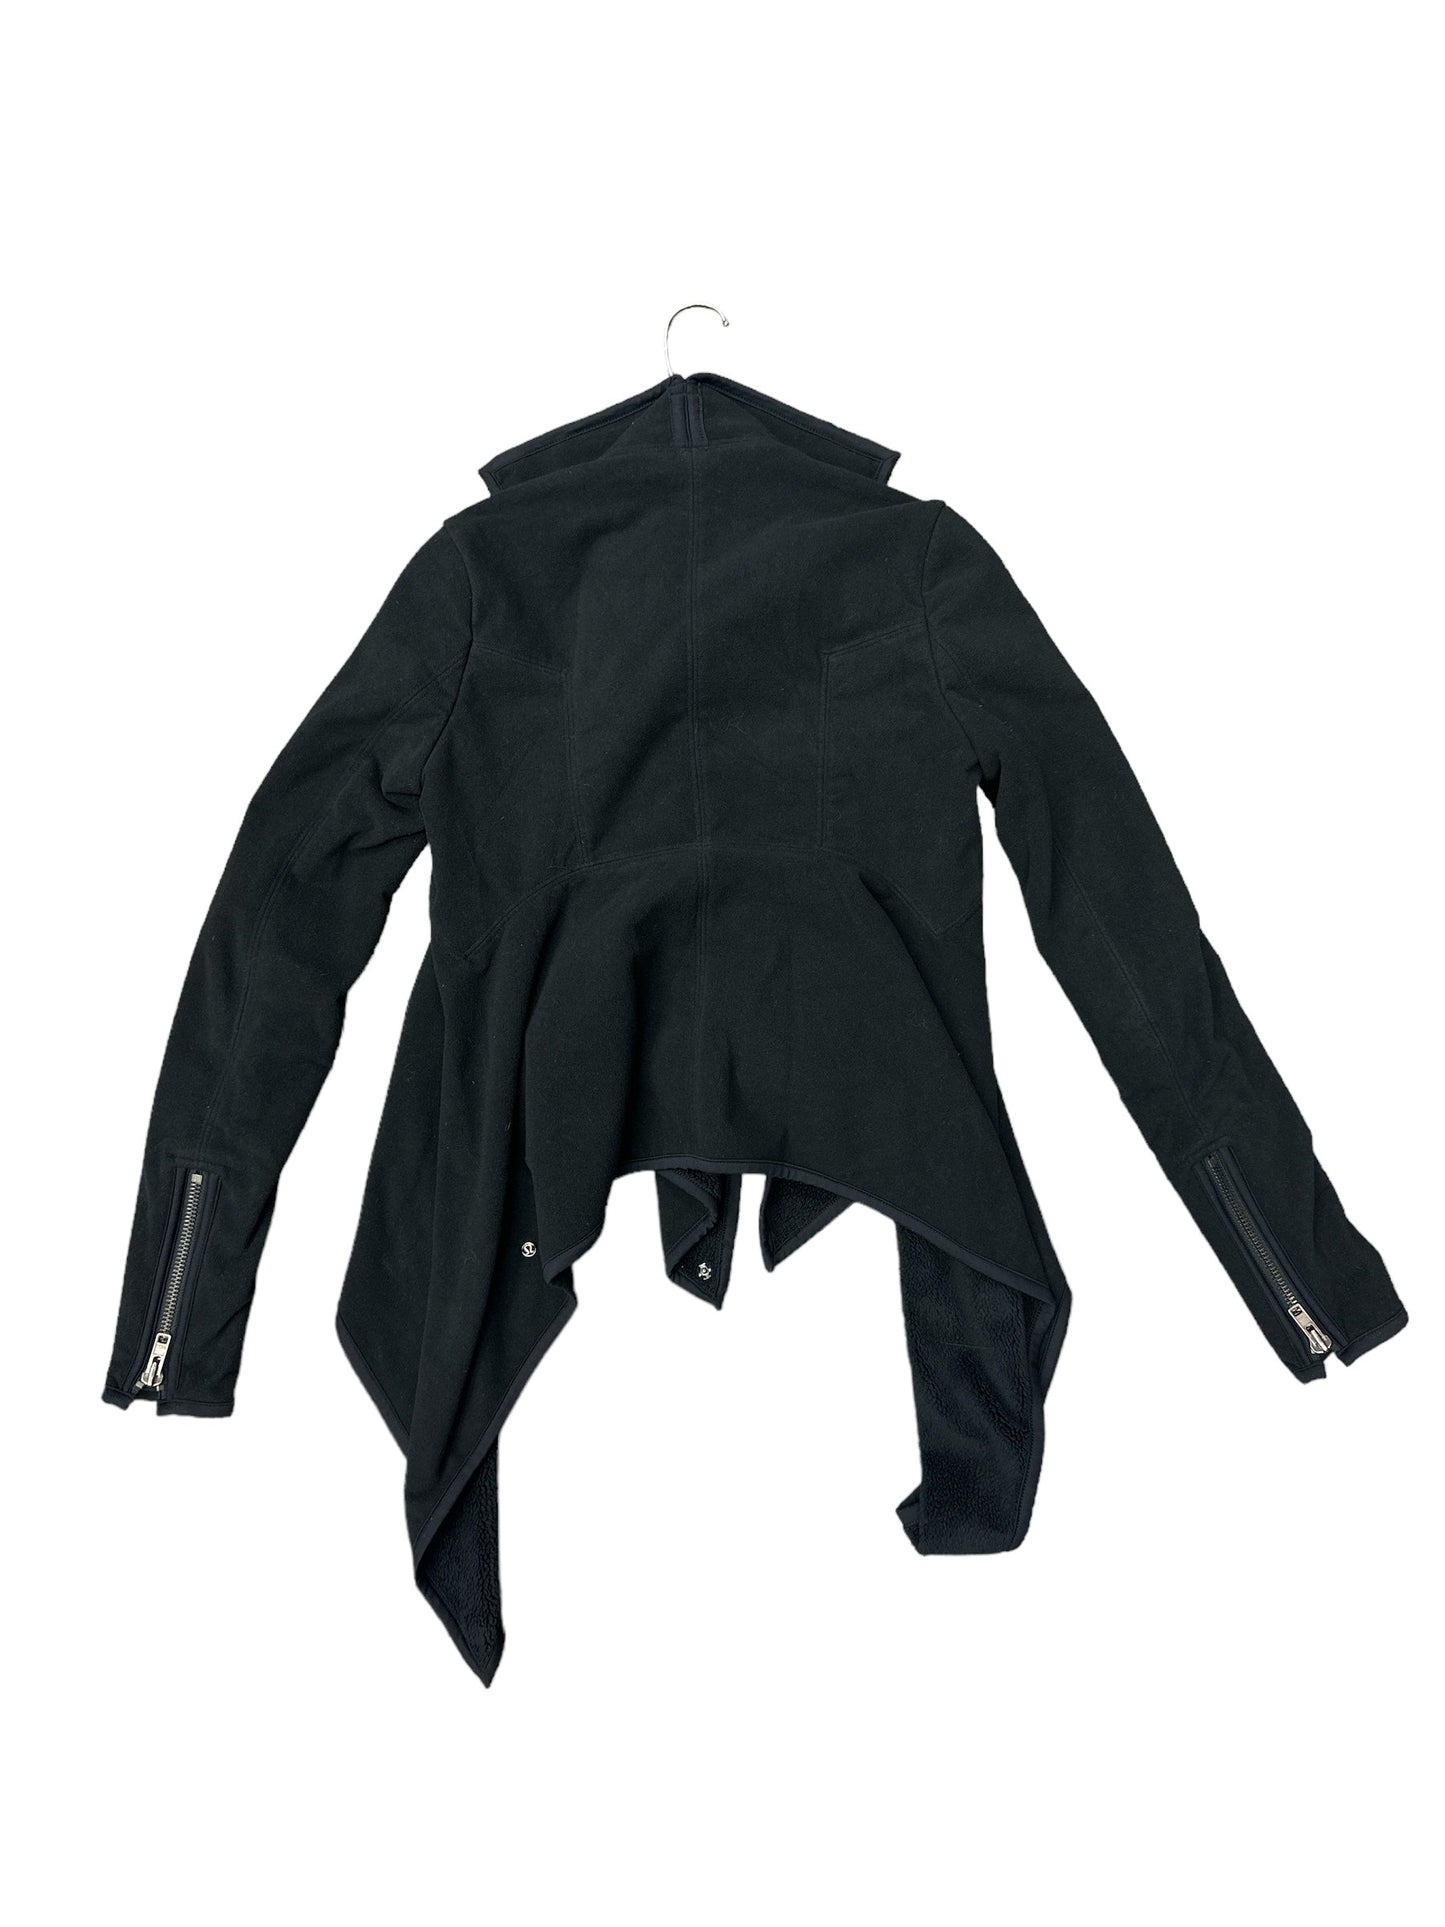 Athletic Fleece By Lululemon  Size: S